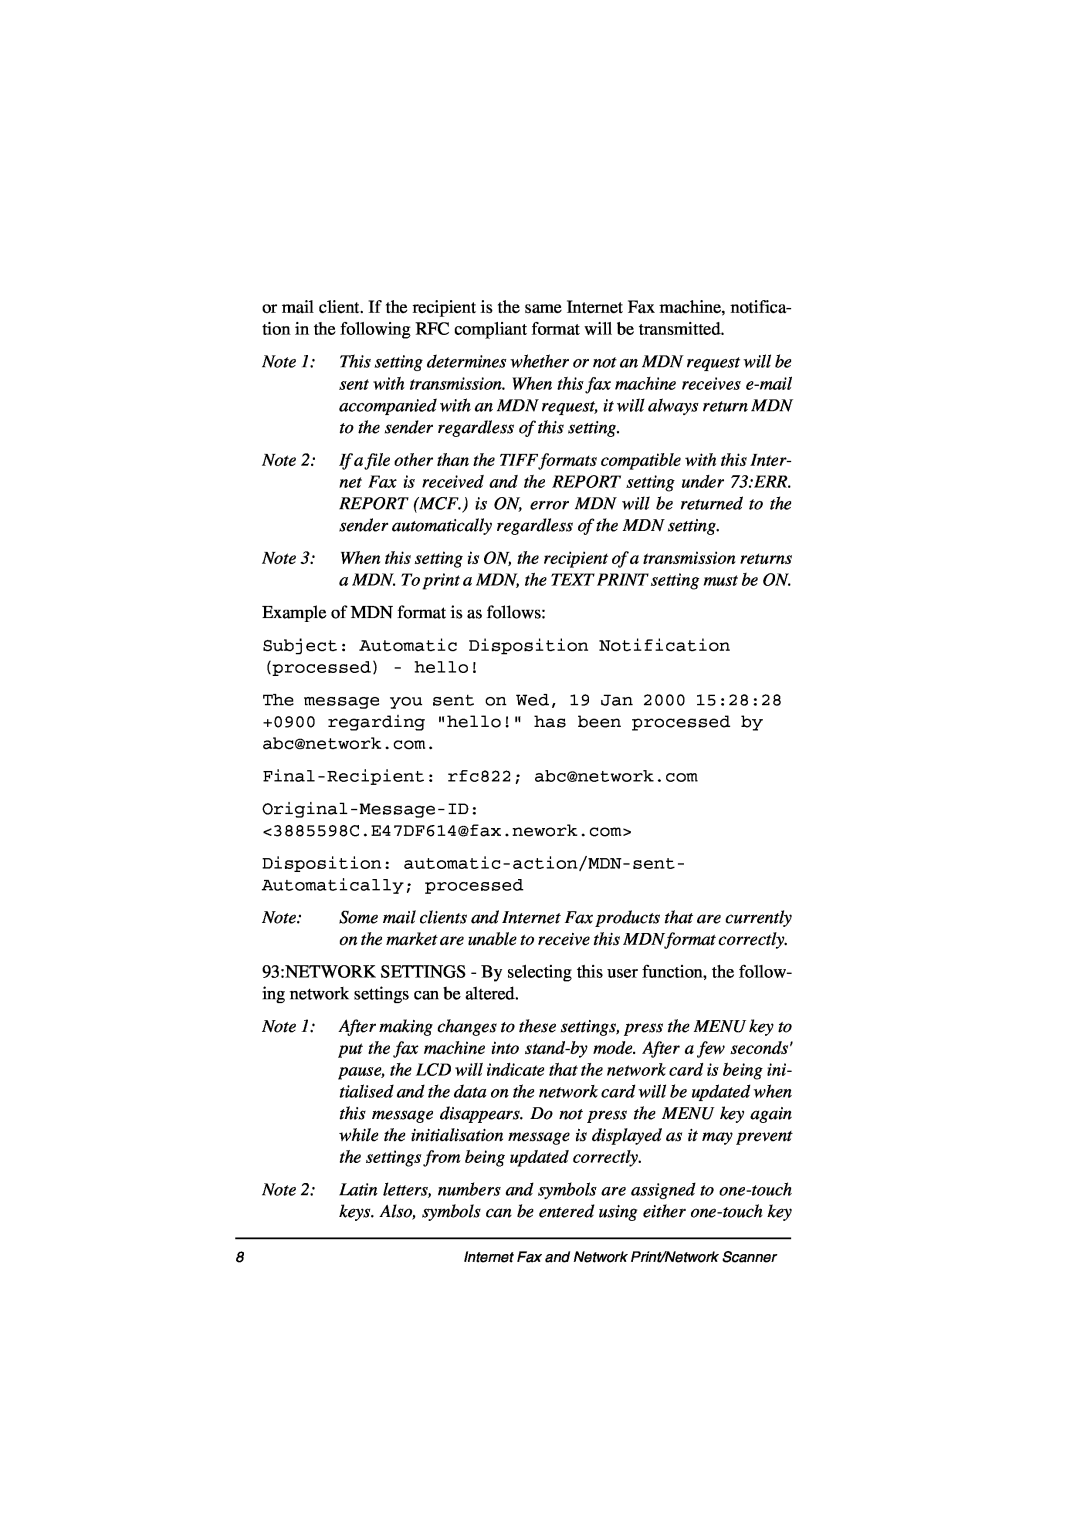 Oki ii manual Example of MDN format is as follows 